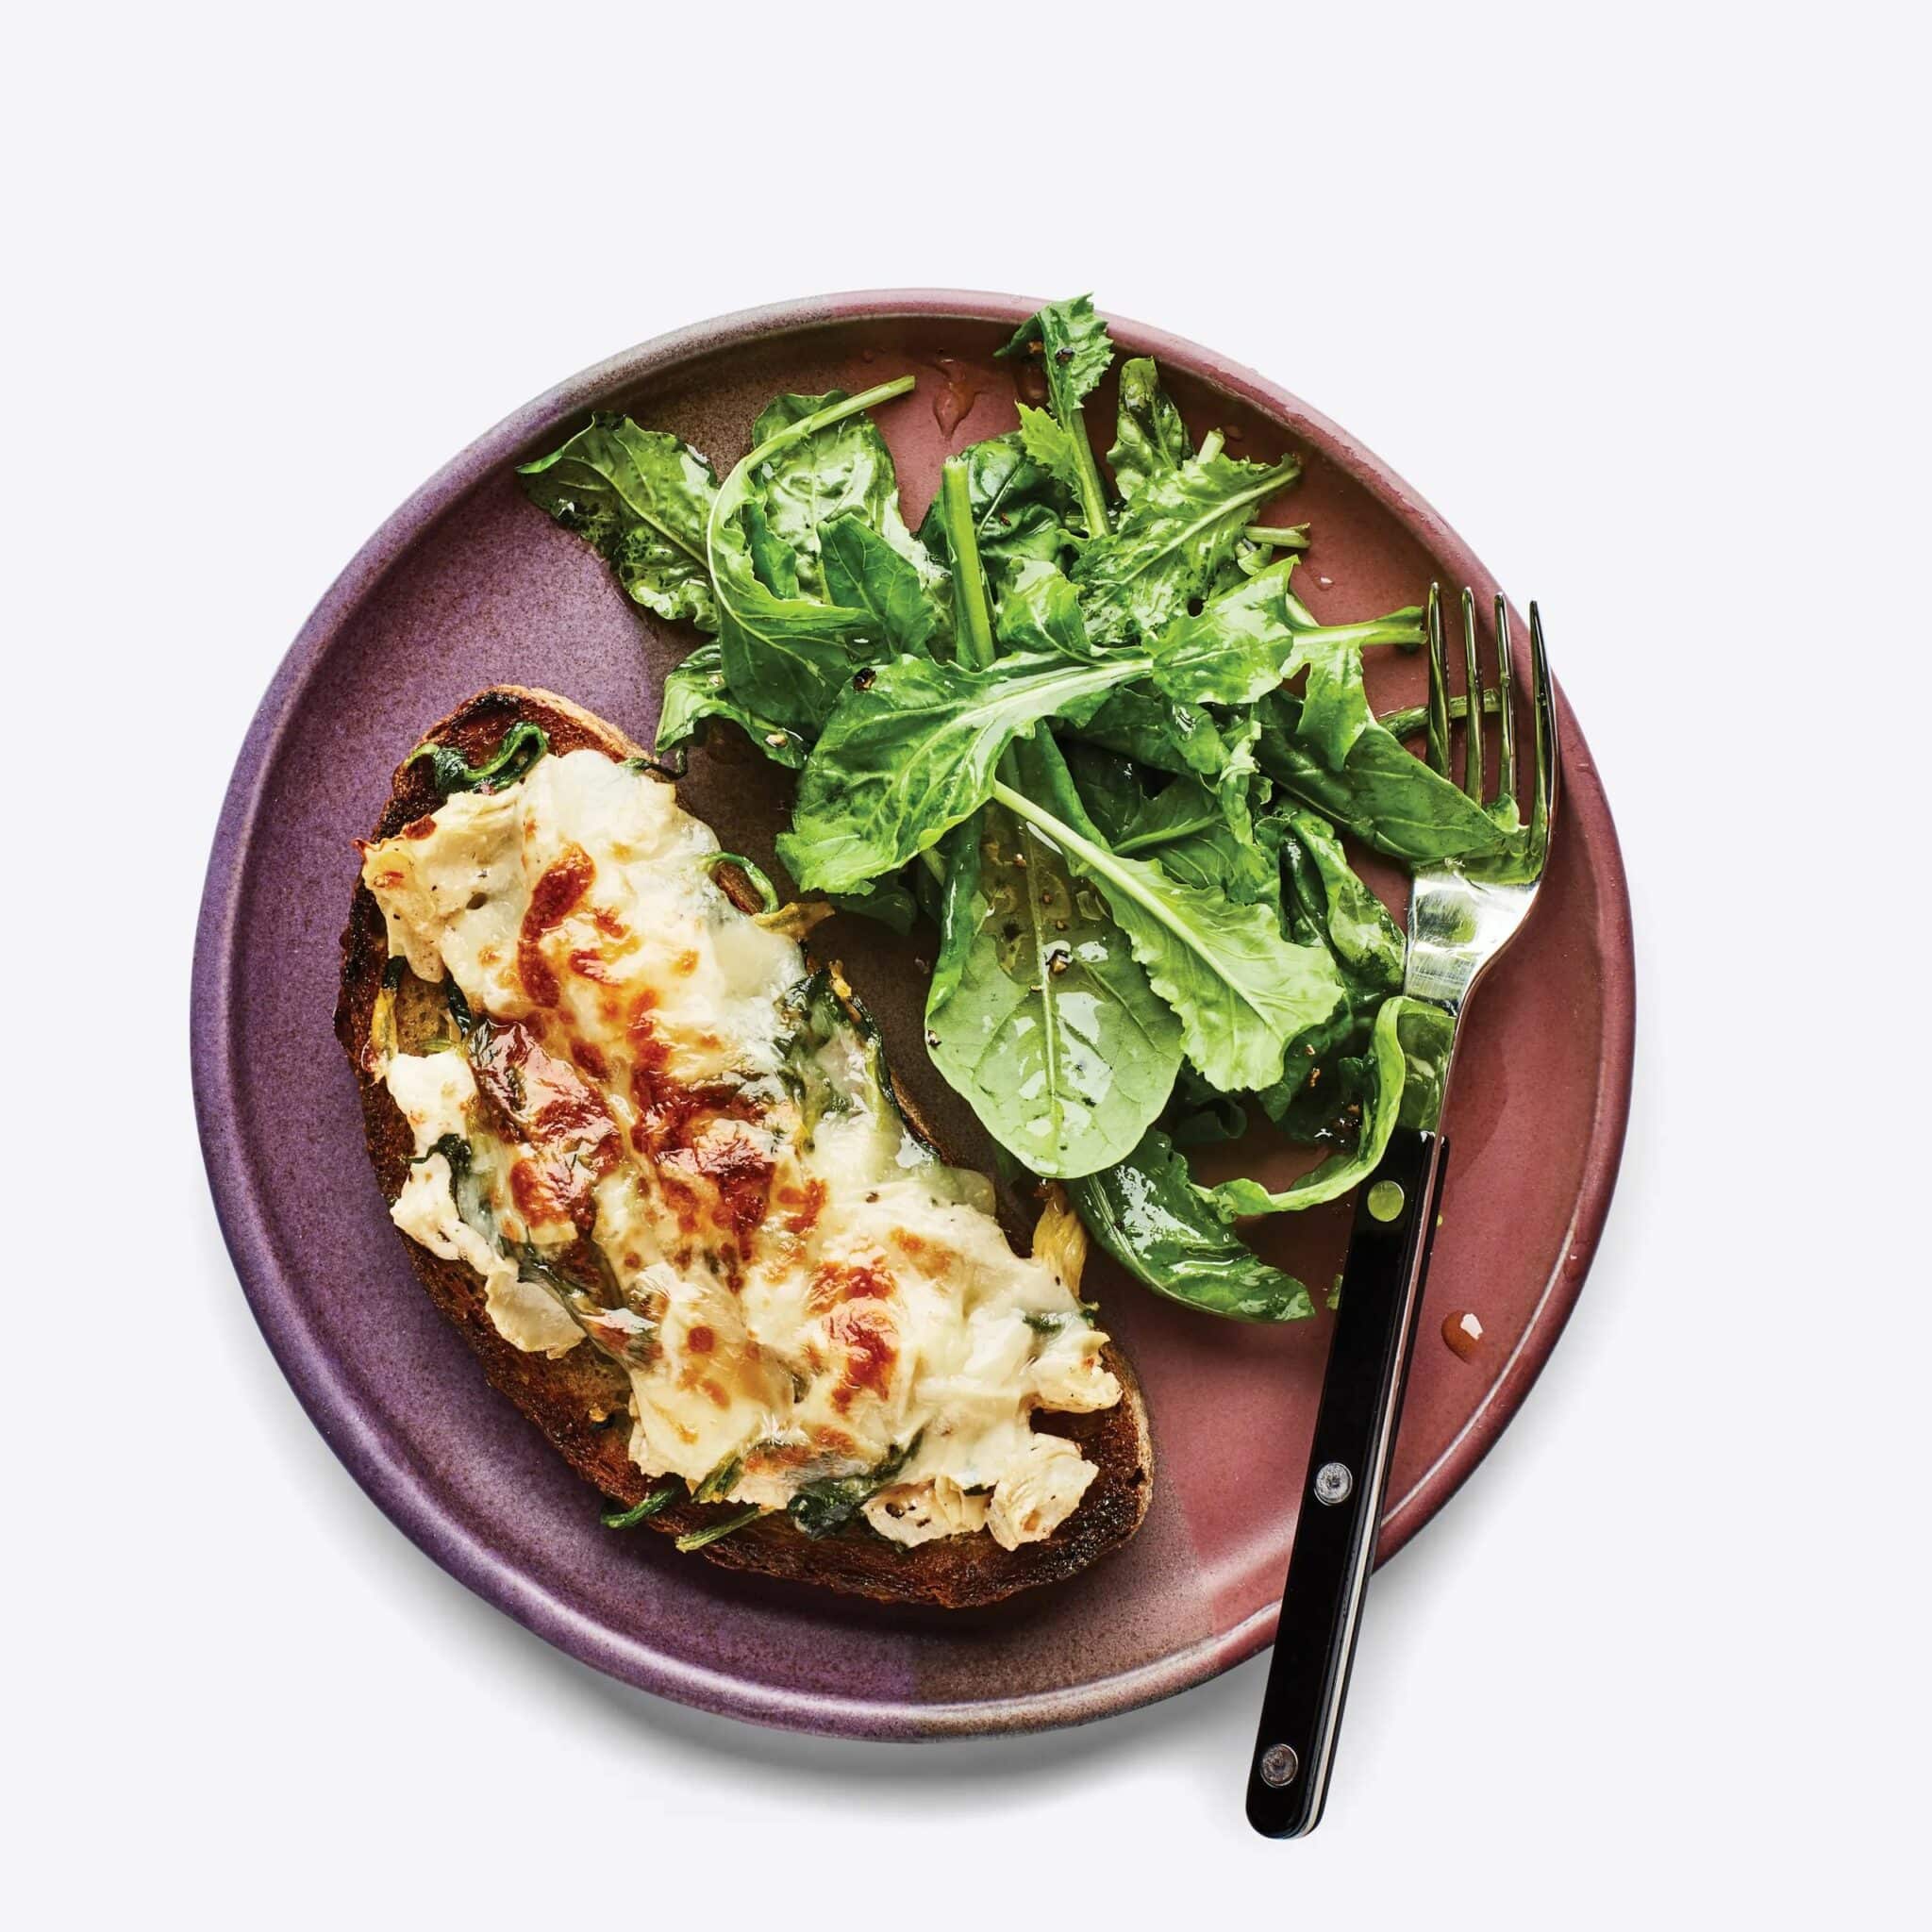 Spinach and Artichoke Salad with Parmesan Vinaigrette